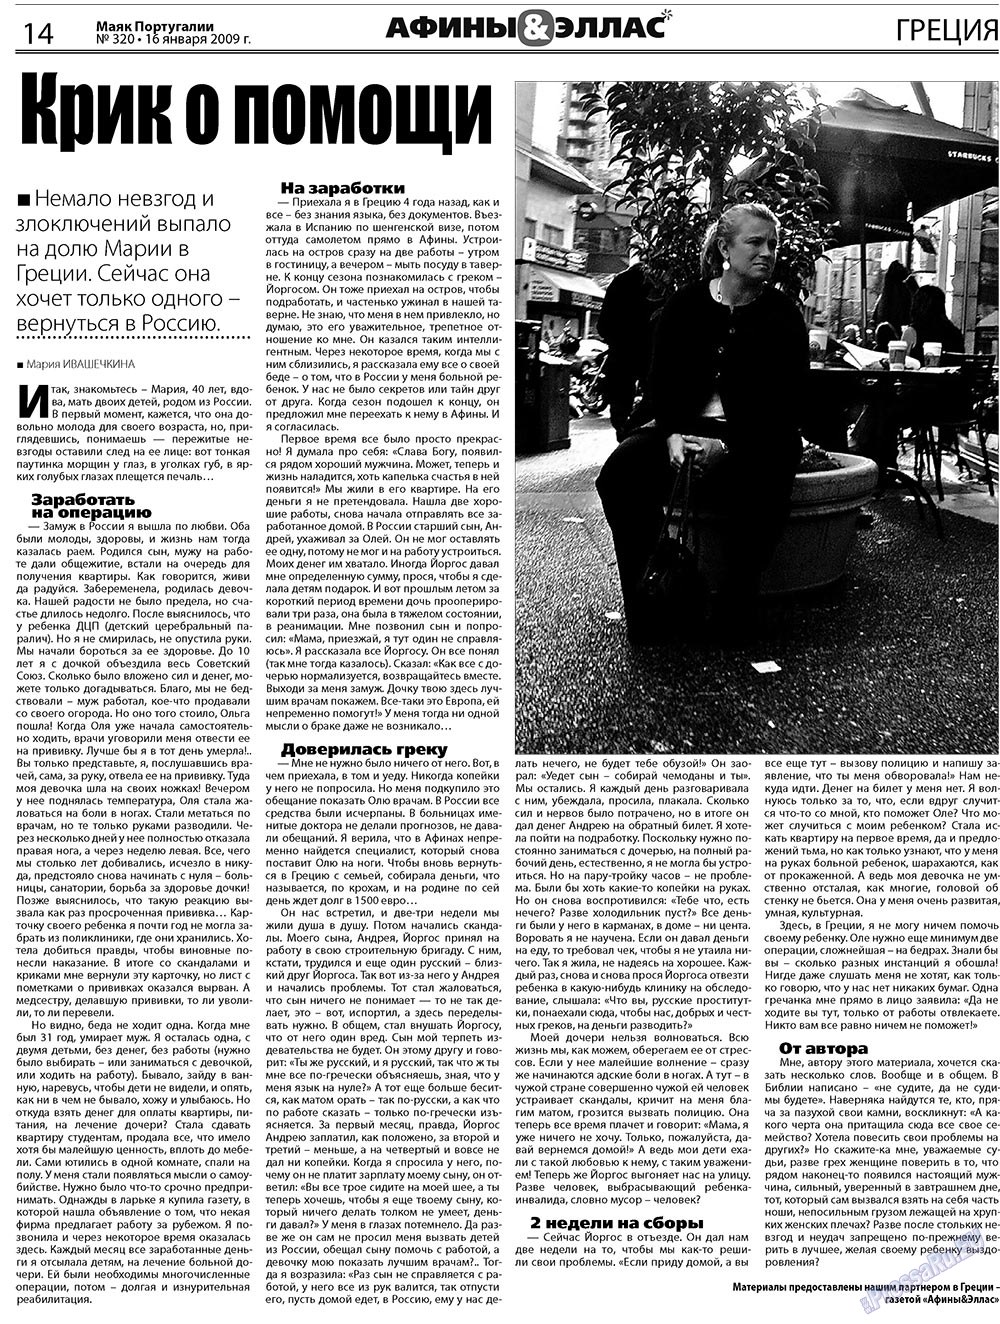 Маяк Португалии, газета. 2009 №3 стр.14